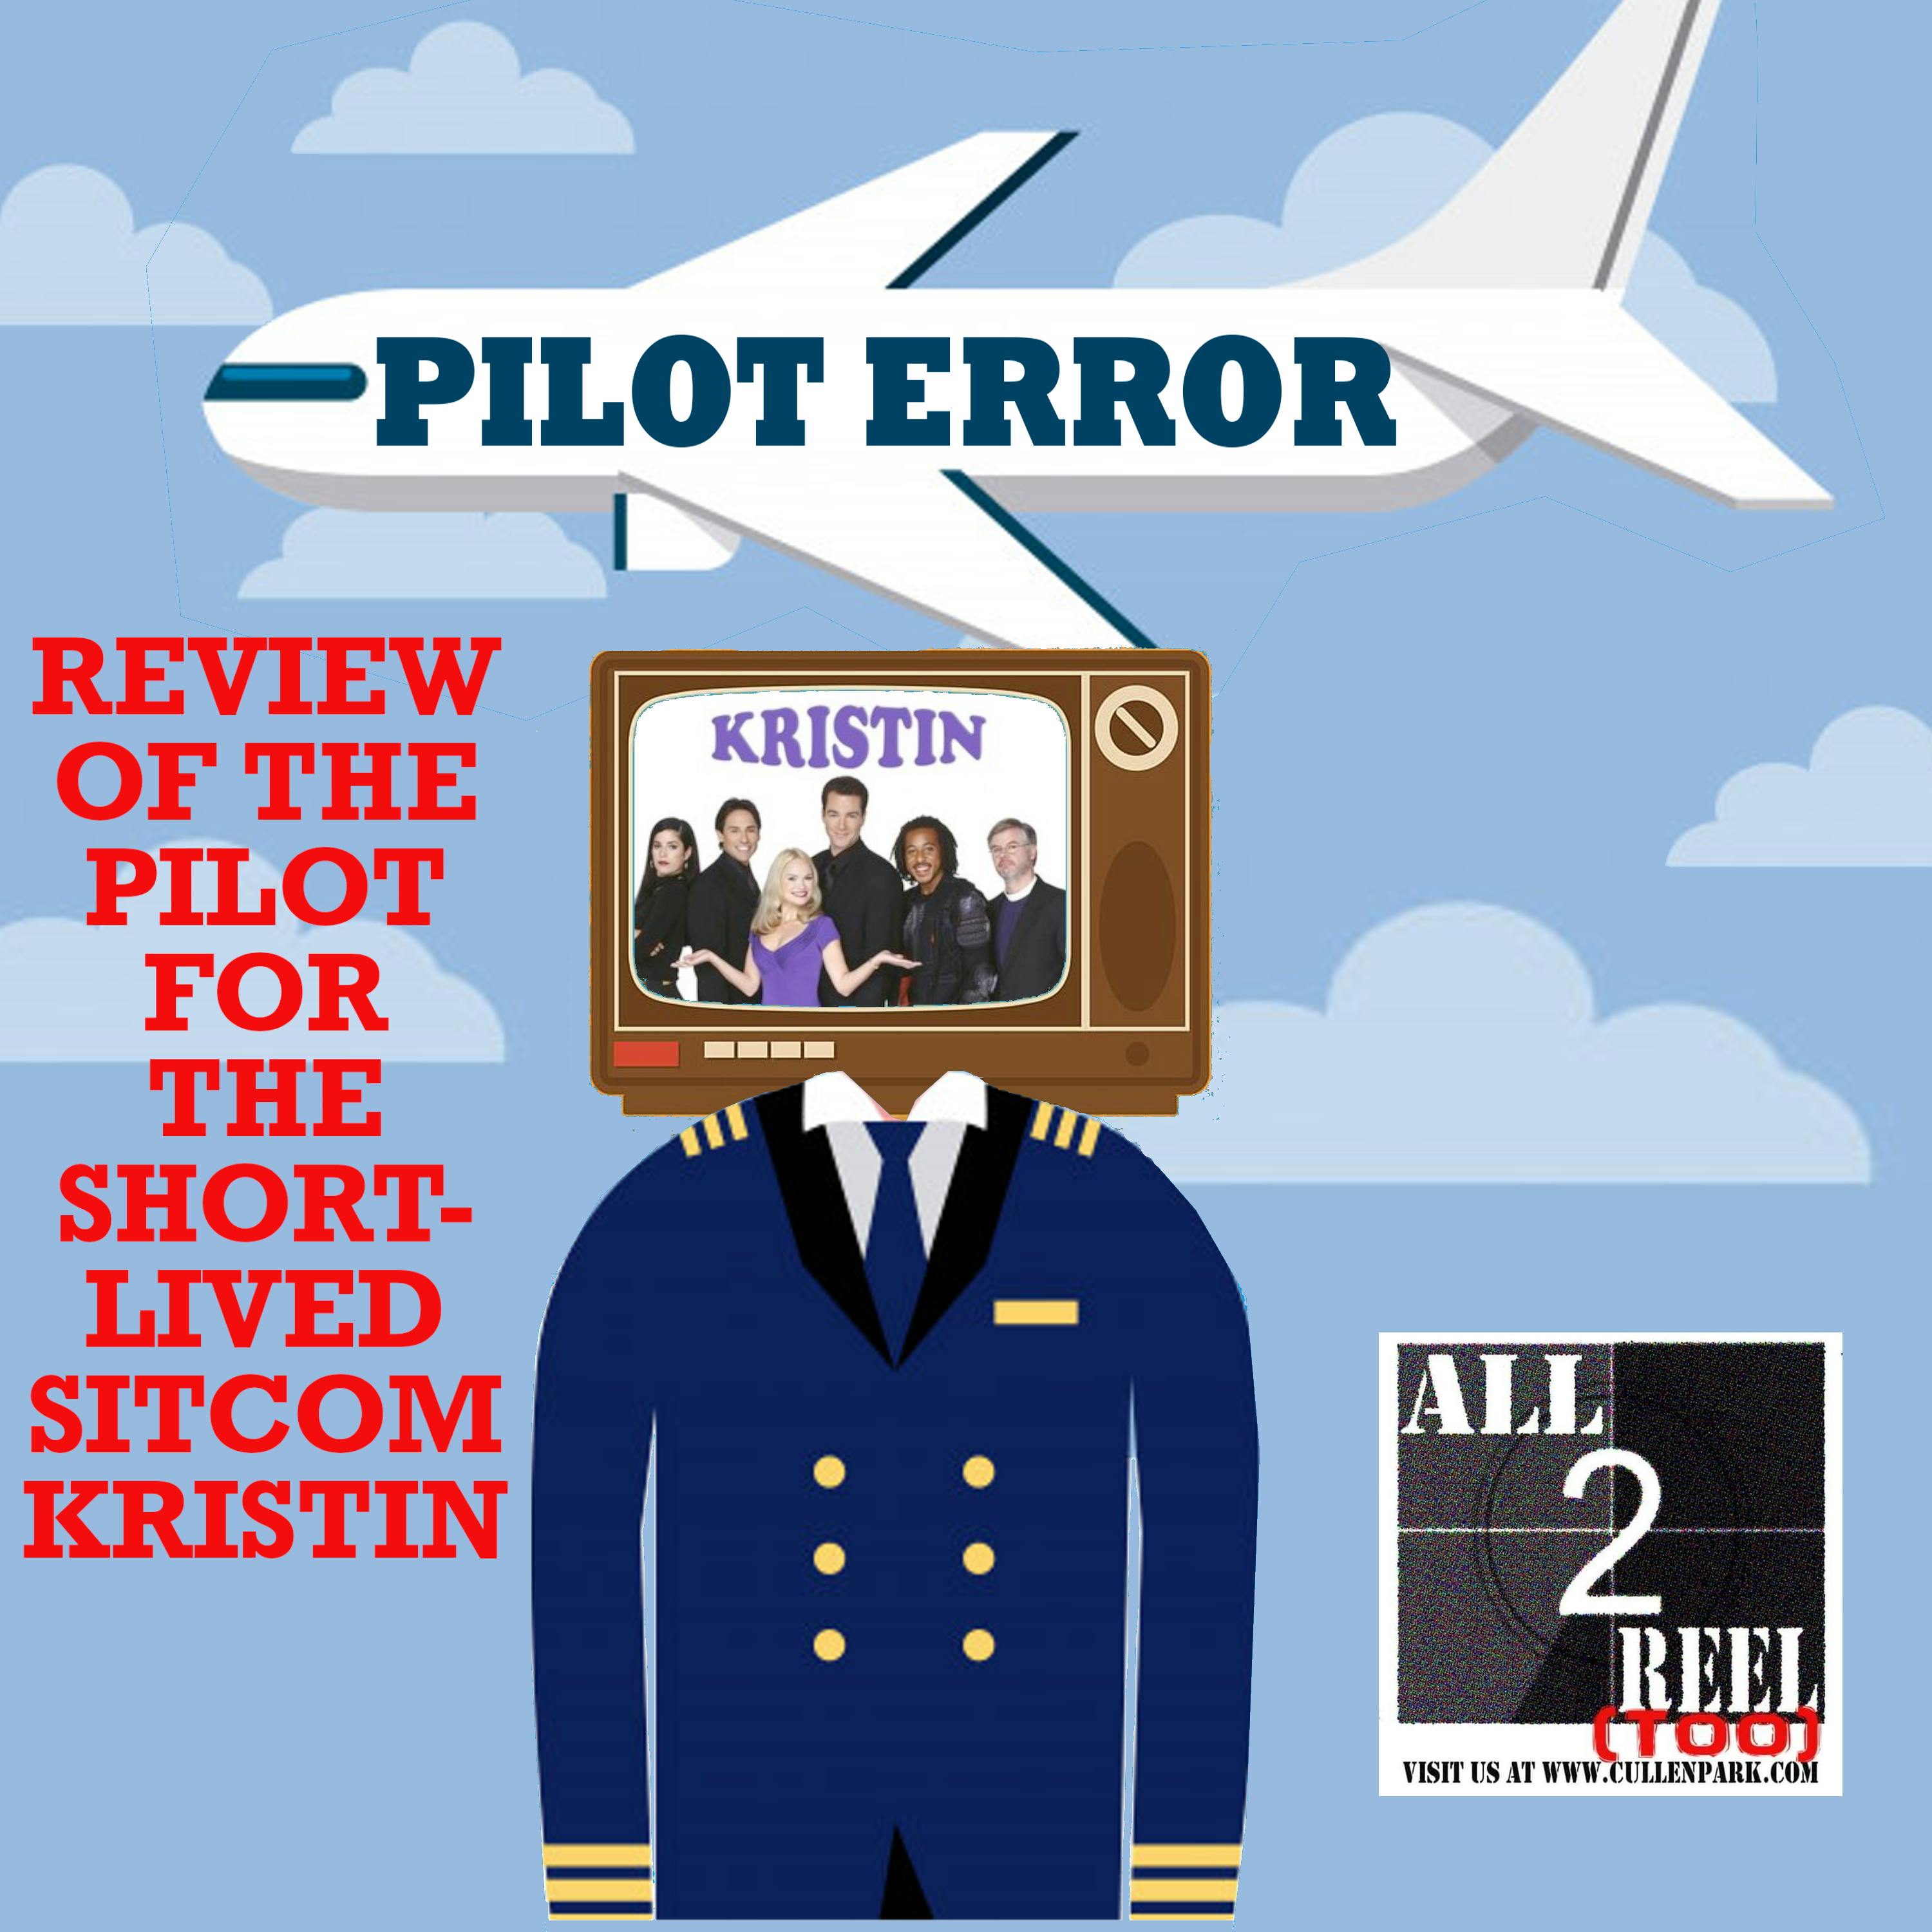 Kristin (2001) - PILOT ERROR REVIEW